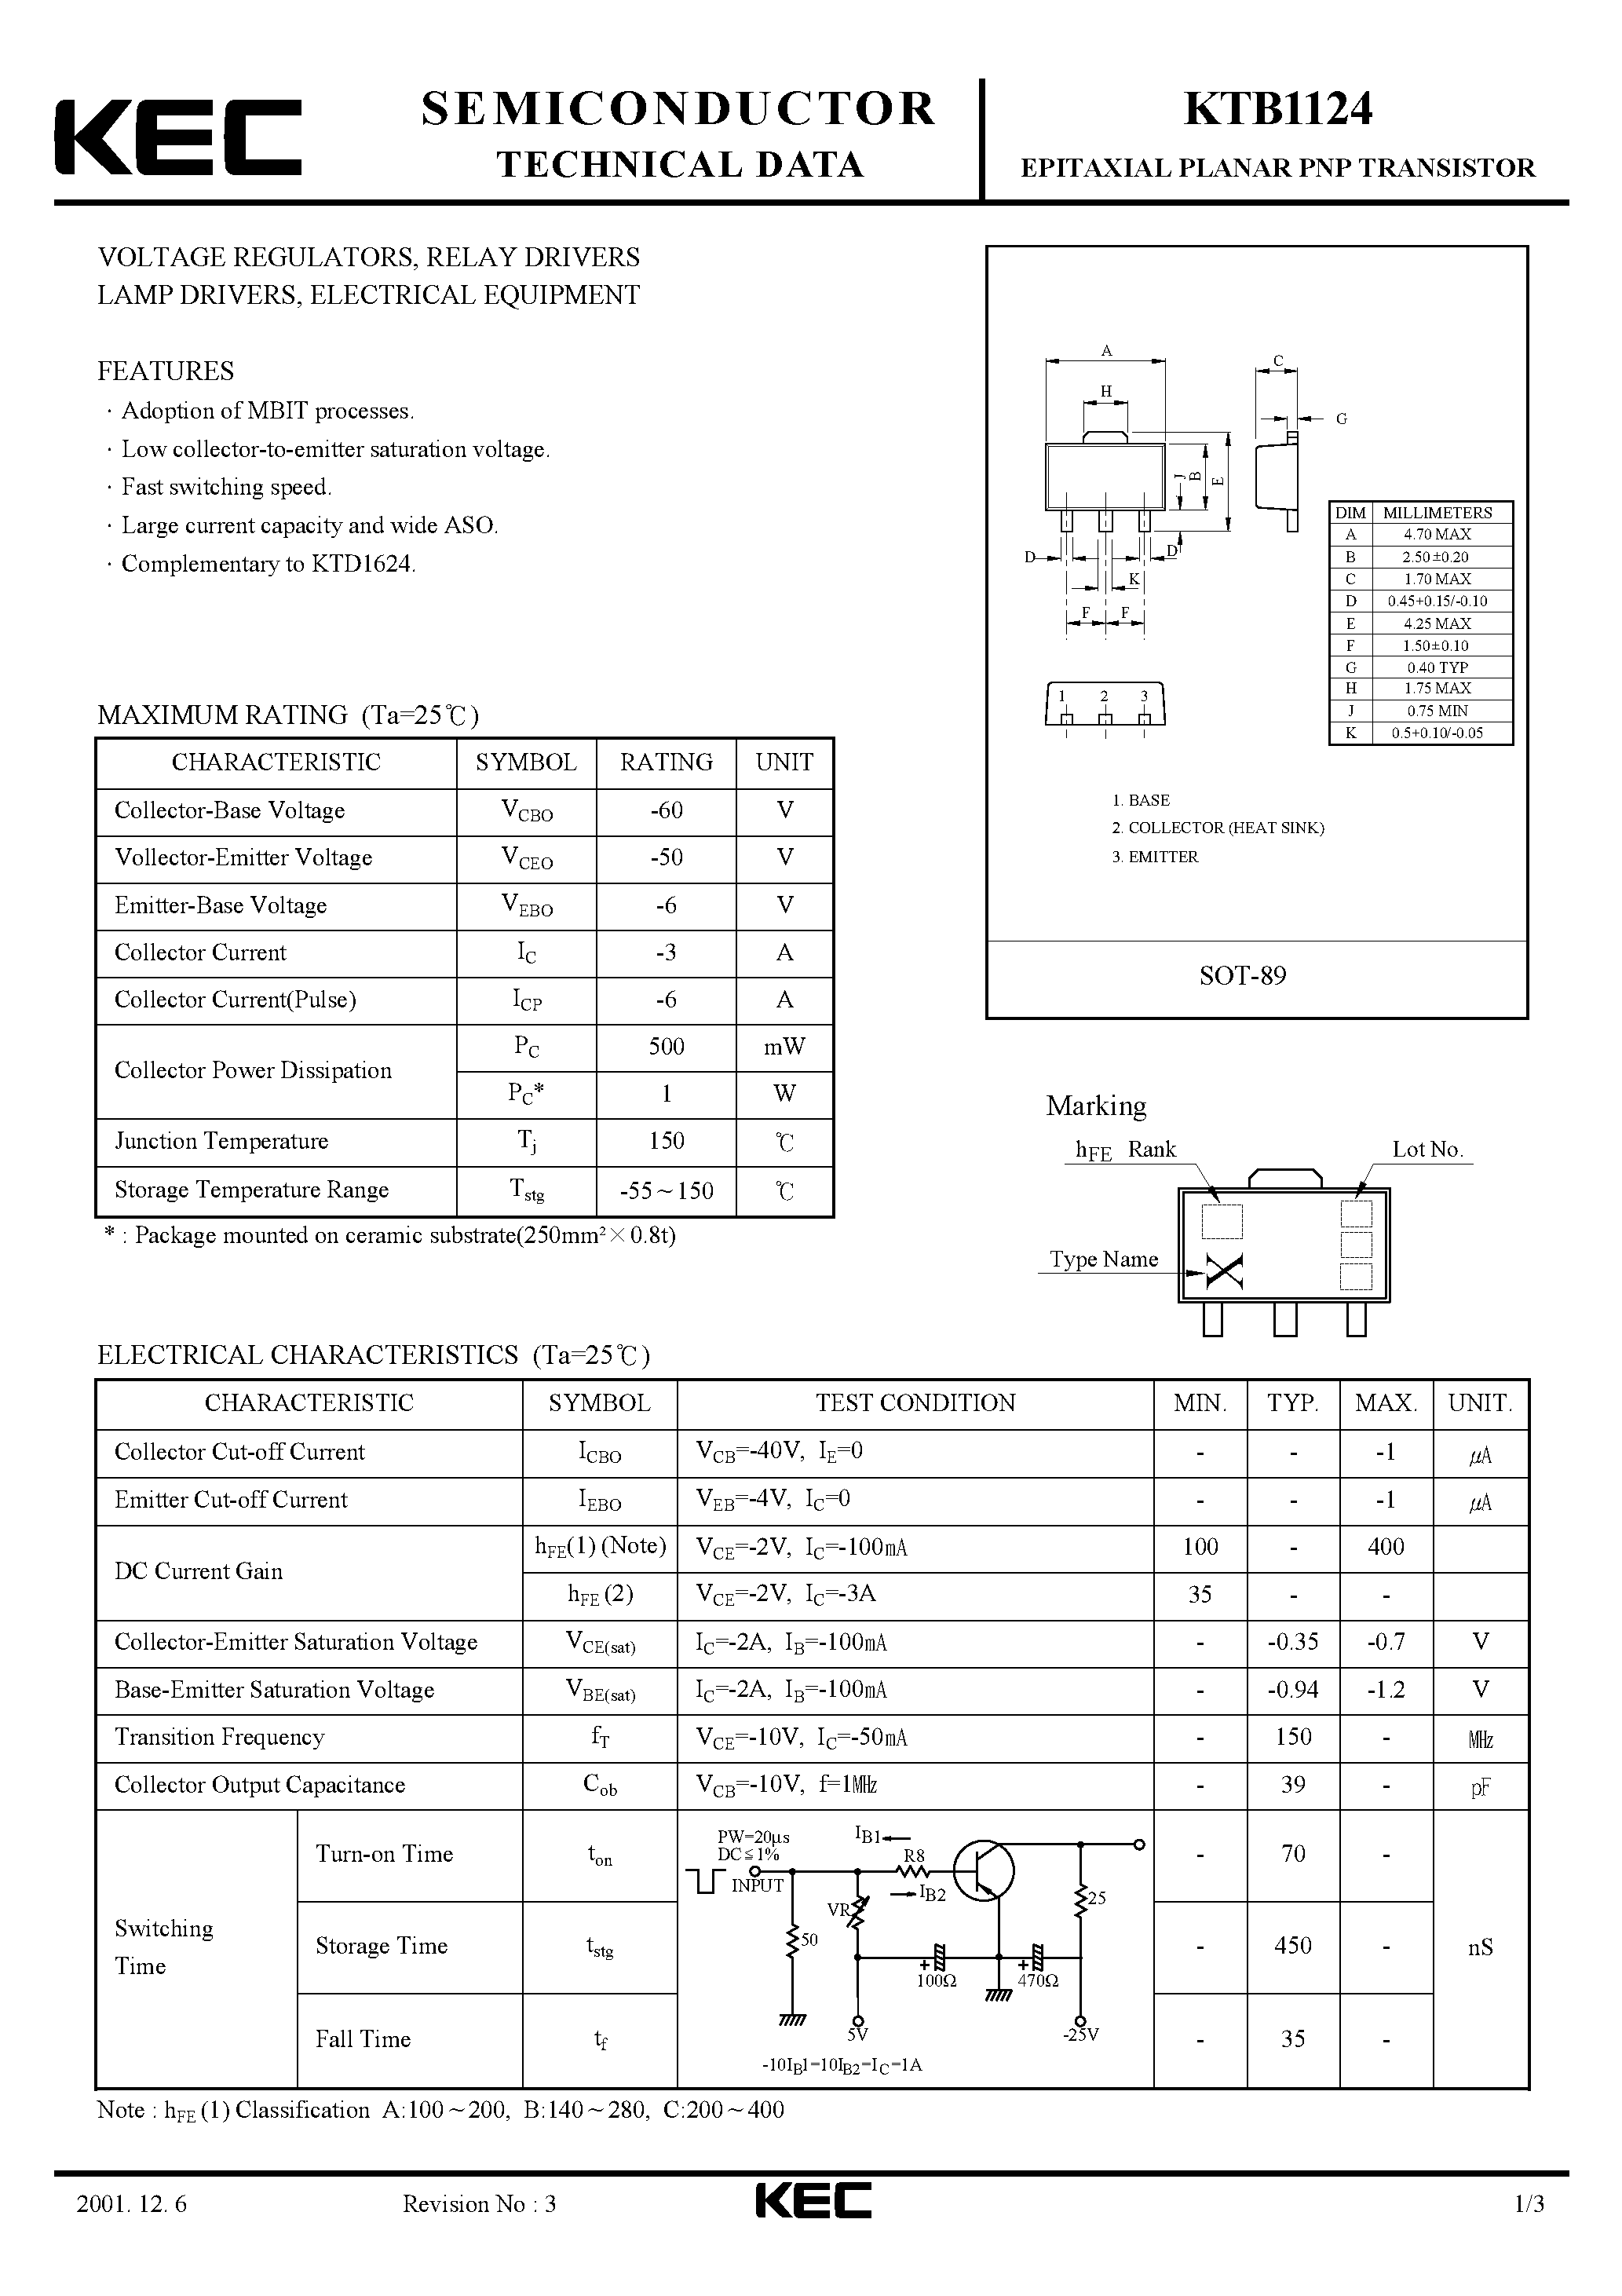 Datasheet KTB1124 - EPITAXIAL PLANAR PNP TRANSISTOR (VOLTAGE REGULATOR RELAY LAMP DRIVER/ ELECTRICAL EQUIPMENT) page 1